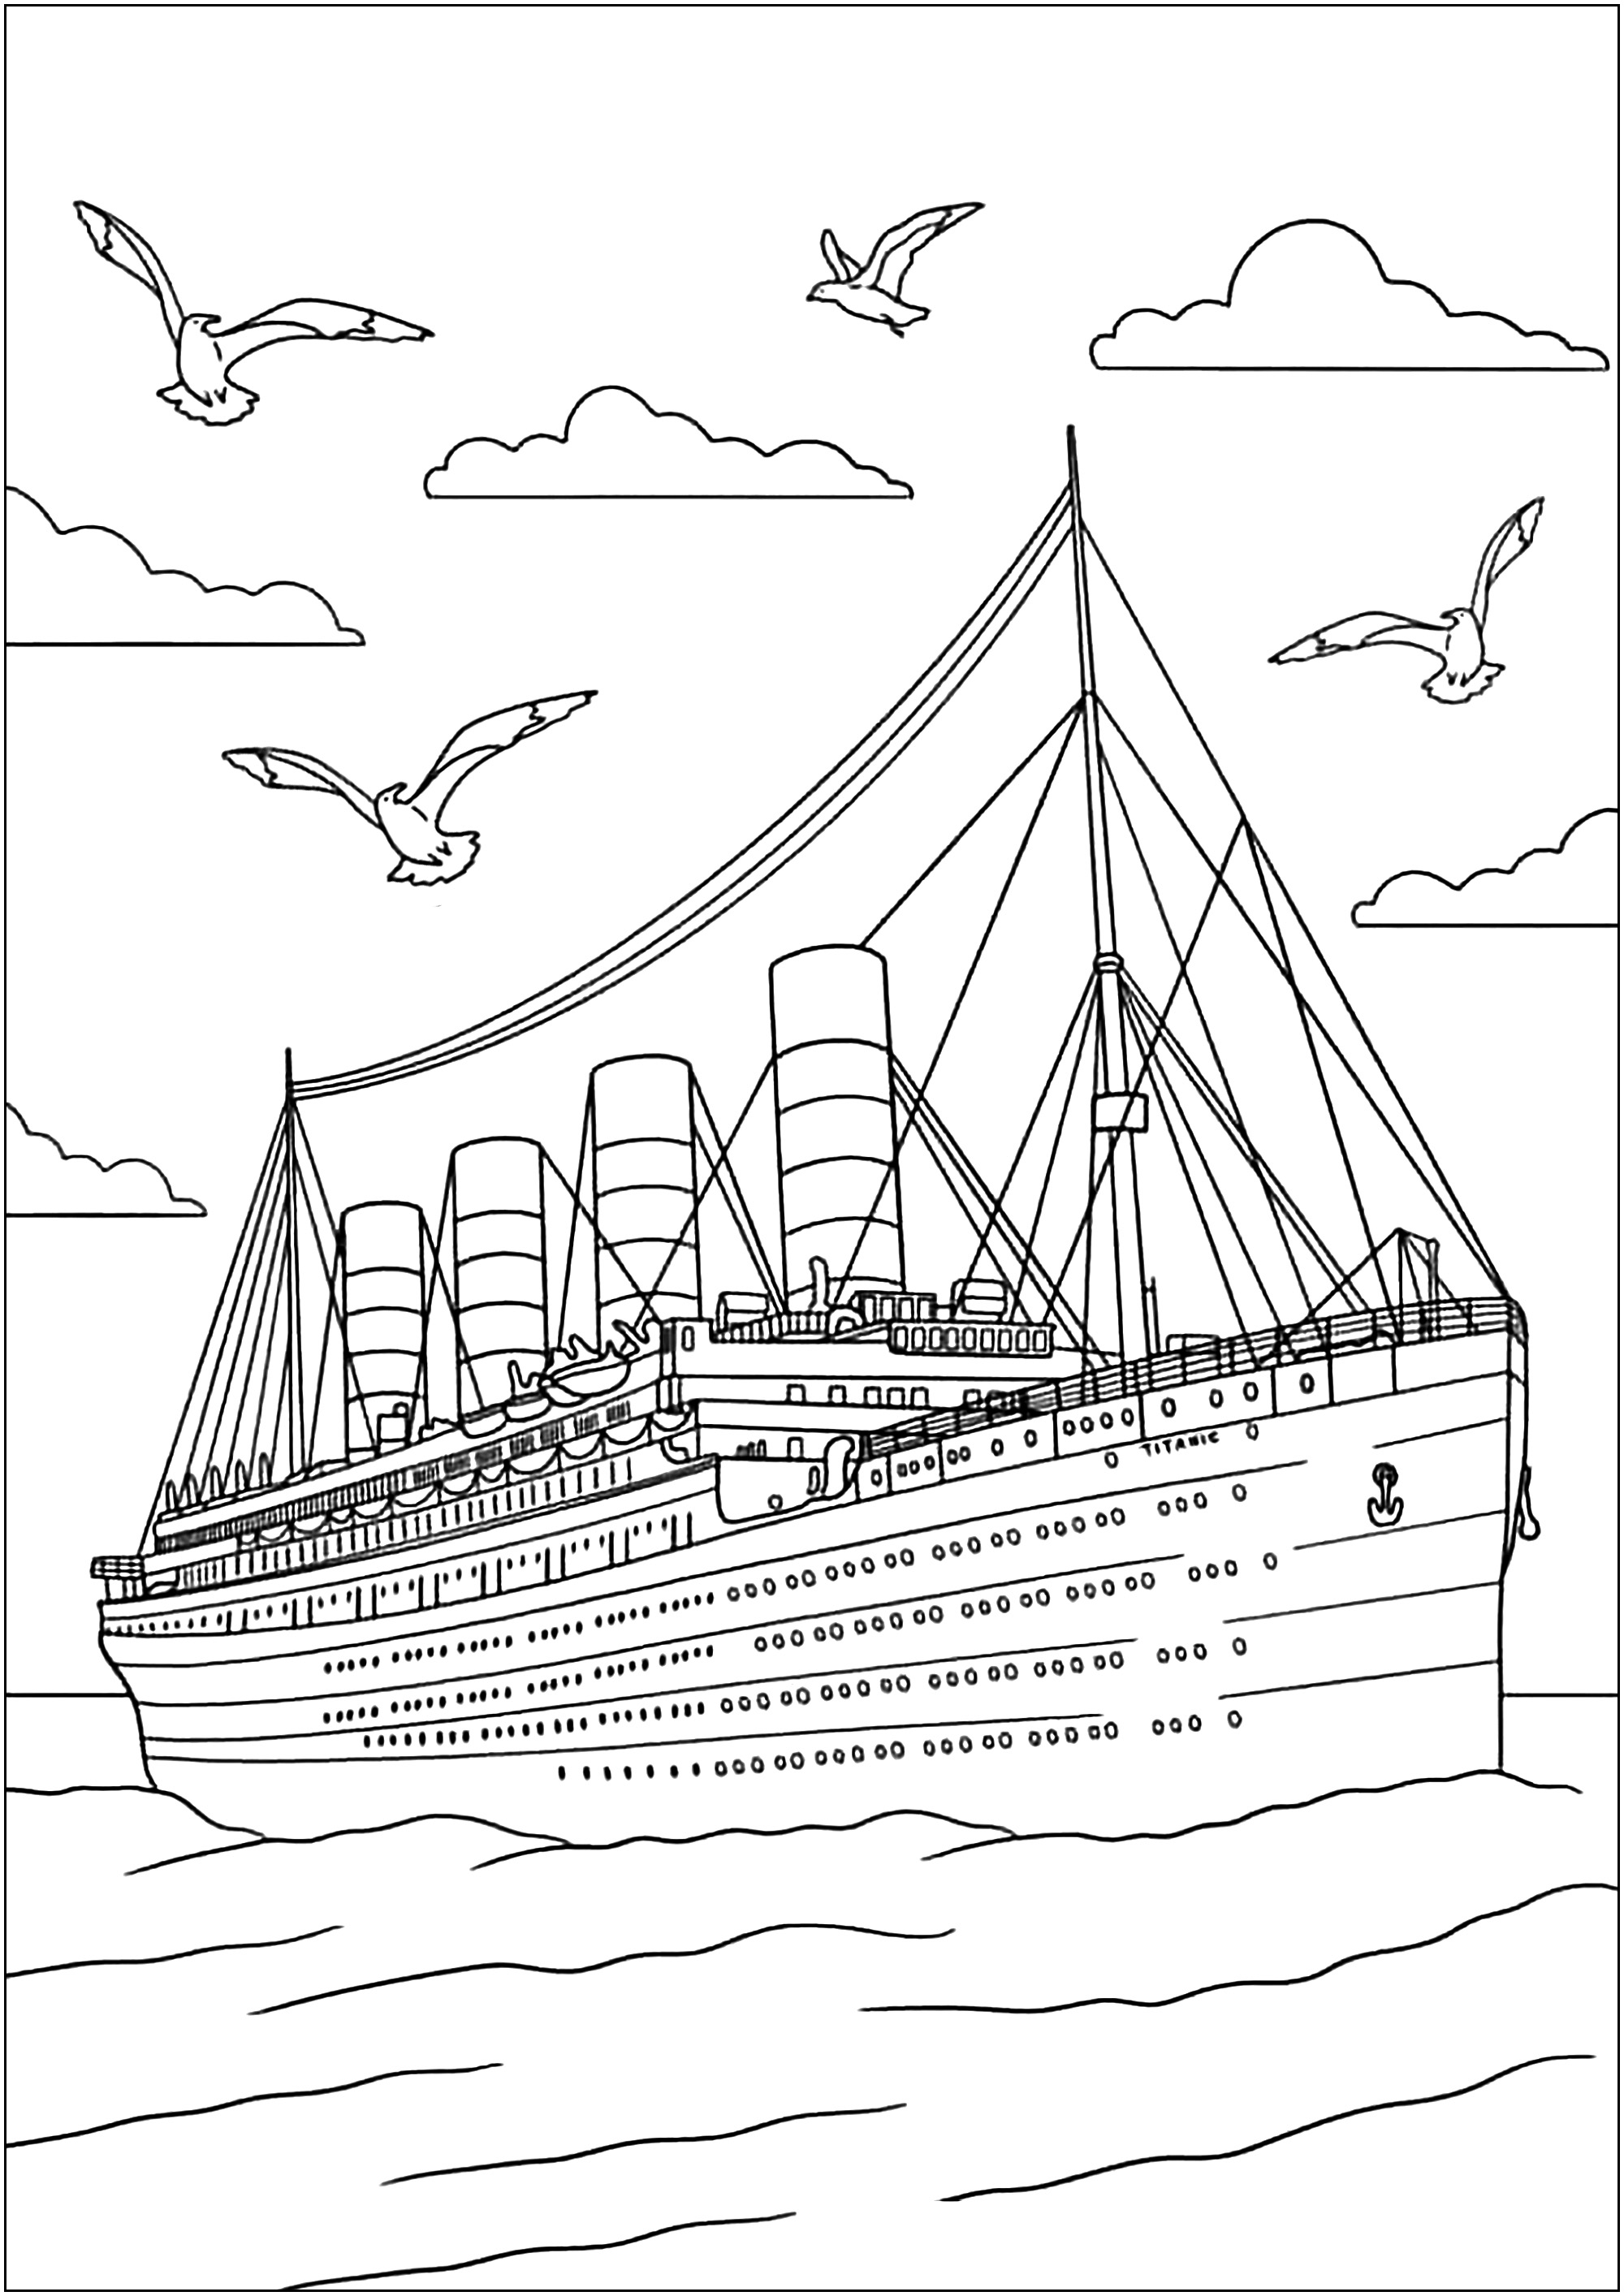 Magnífico dibujo del Titanic, muy detallado